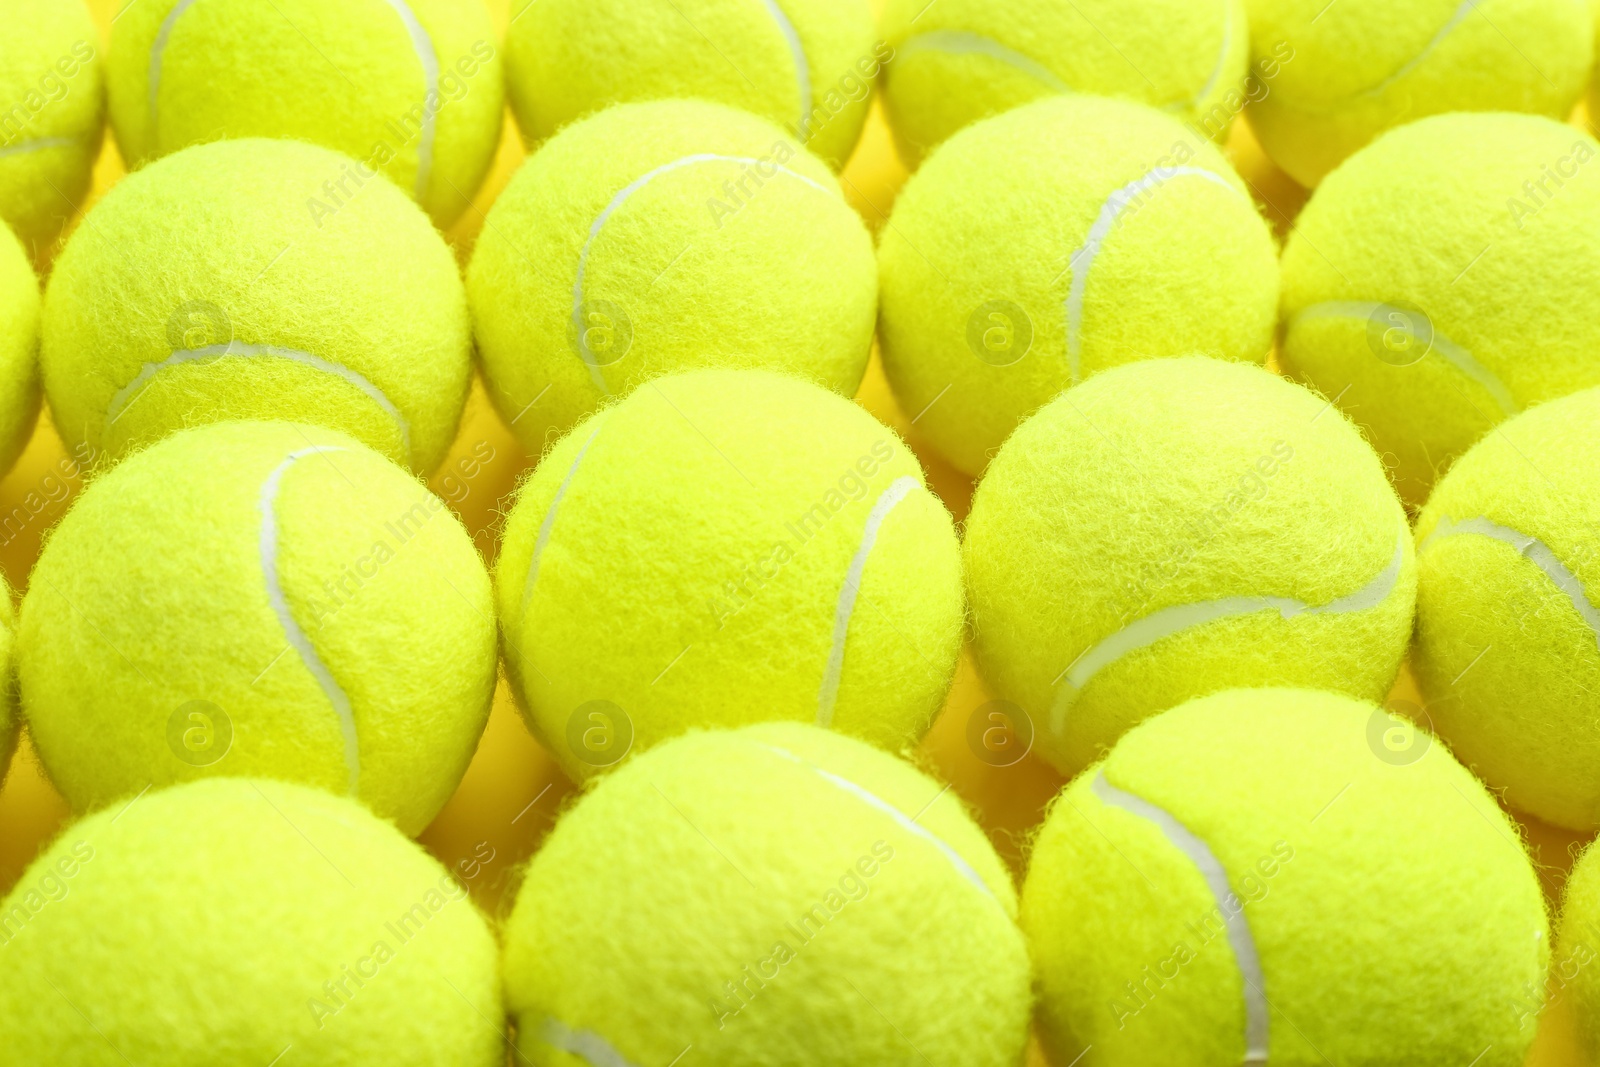 Photo of Tennis balls on yellow background, closeup. Sports equipment